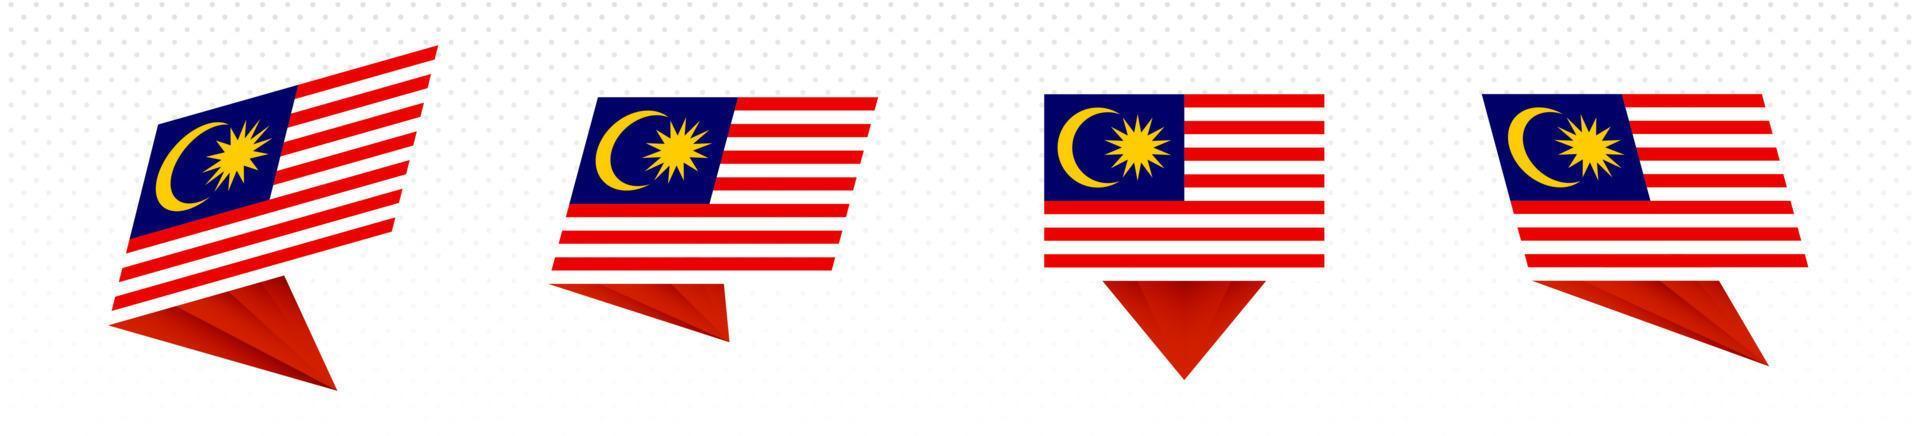 Flagge Malaysias im modernen abstrakten Design, Flaggensatz. vektor